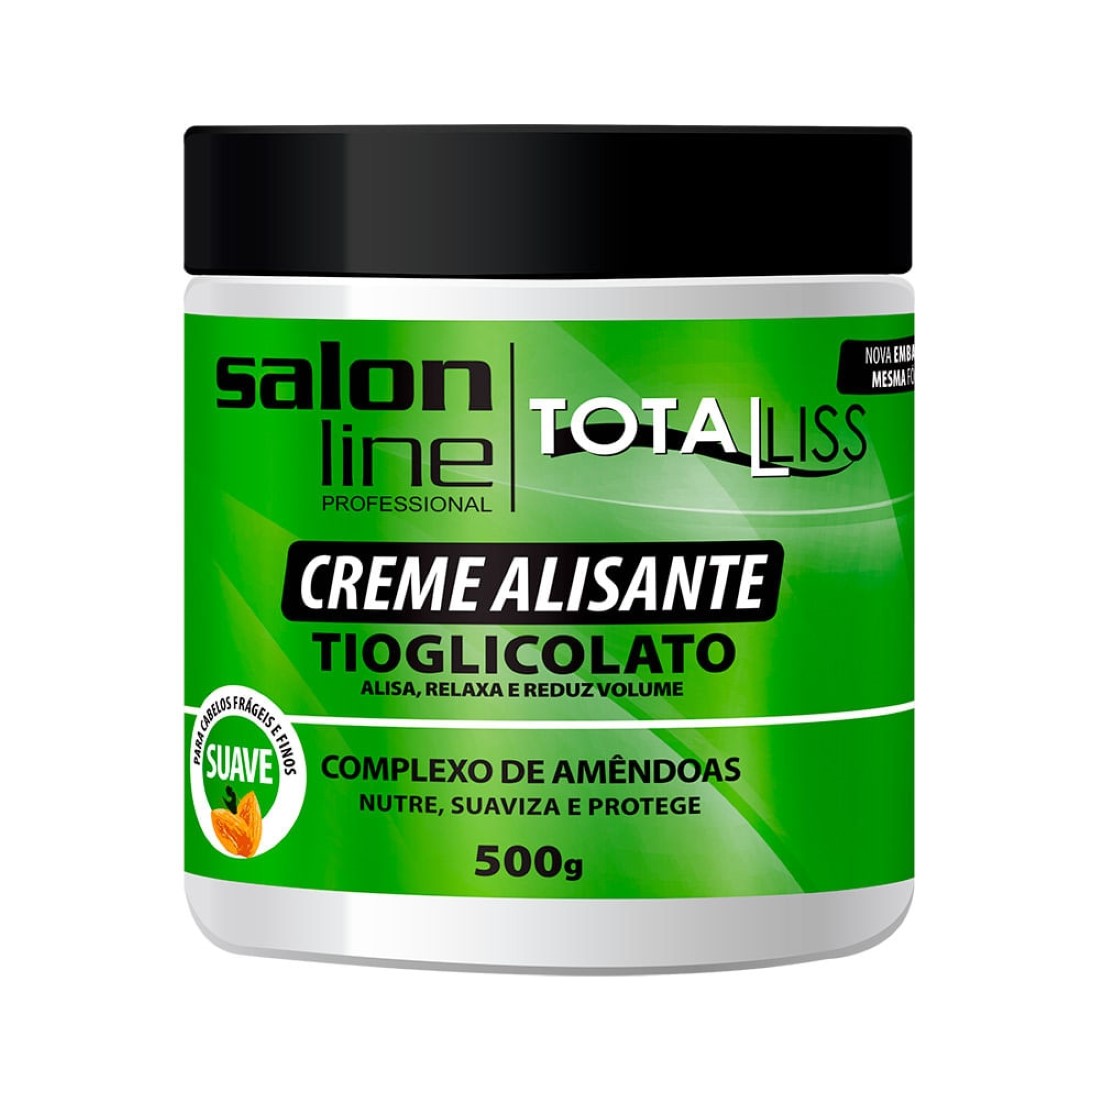 Creme Alisante Totalliss Normal 500g - Salon Line